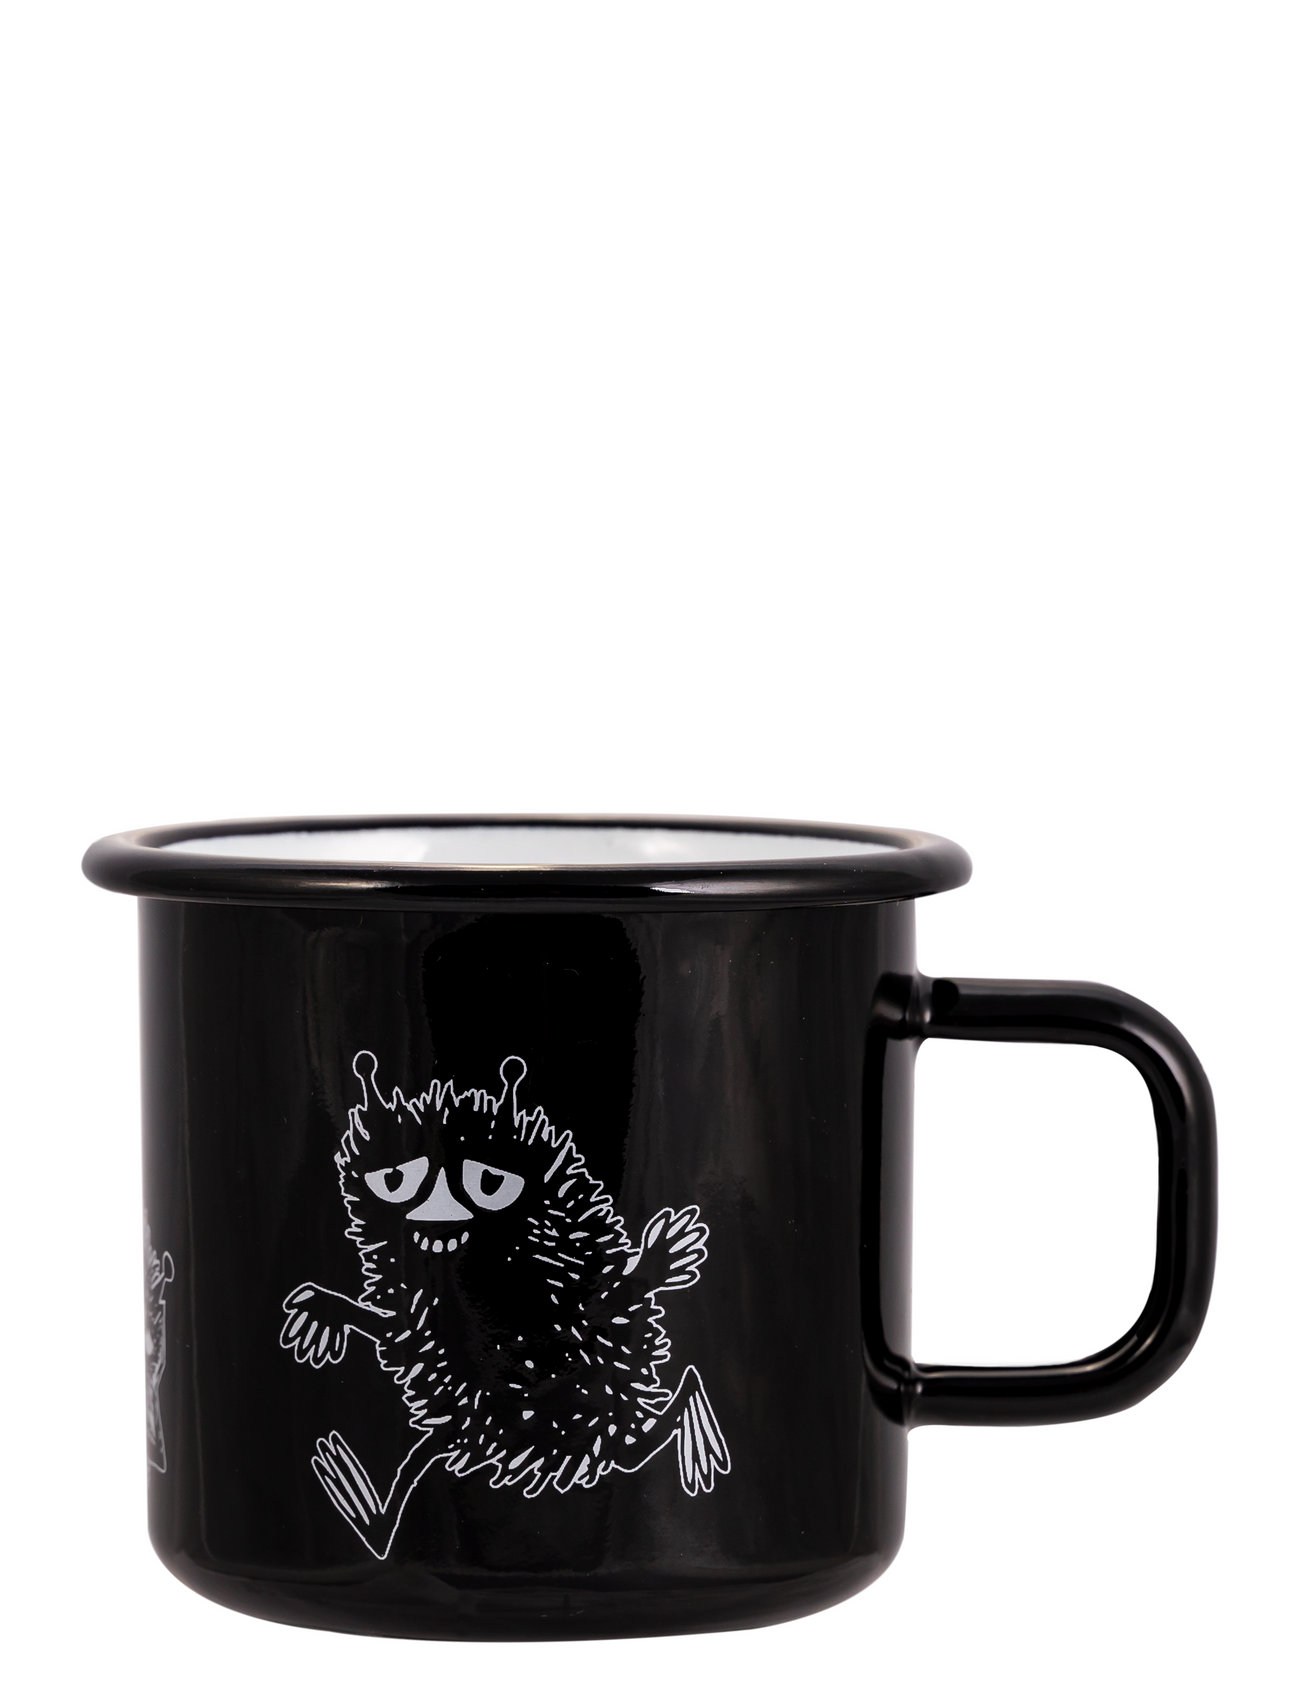 Moomin Enamel Mug 37Cl Stinky Home Tableware Cups & Mugs Coffee Cups Black Moomin